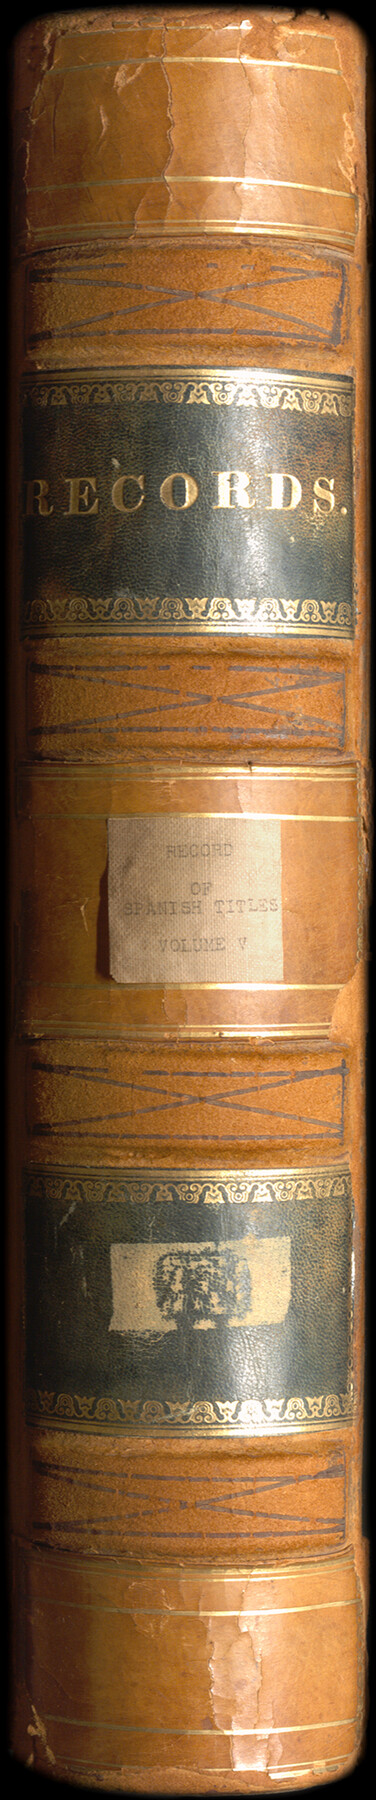 94530, Record of Spanish Titles, Vol. V, Historical Volumes